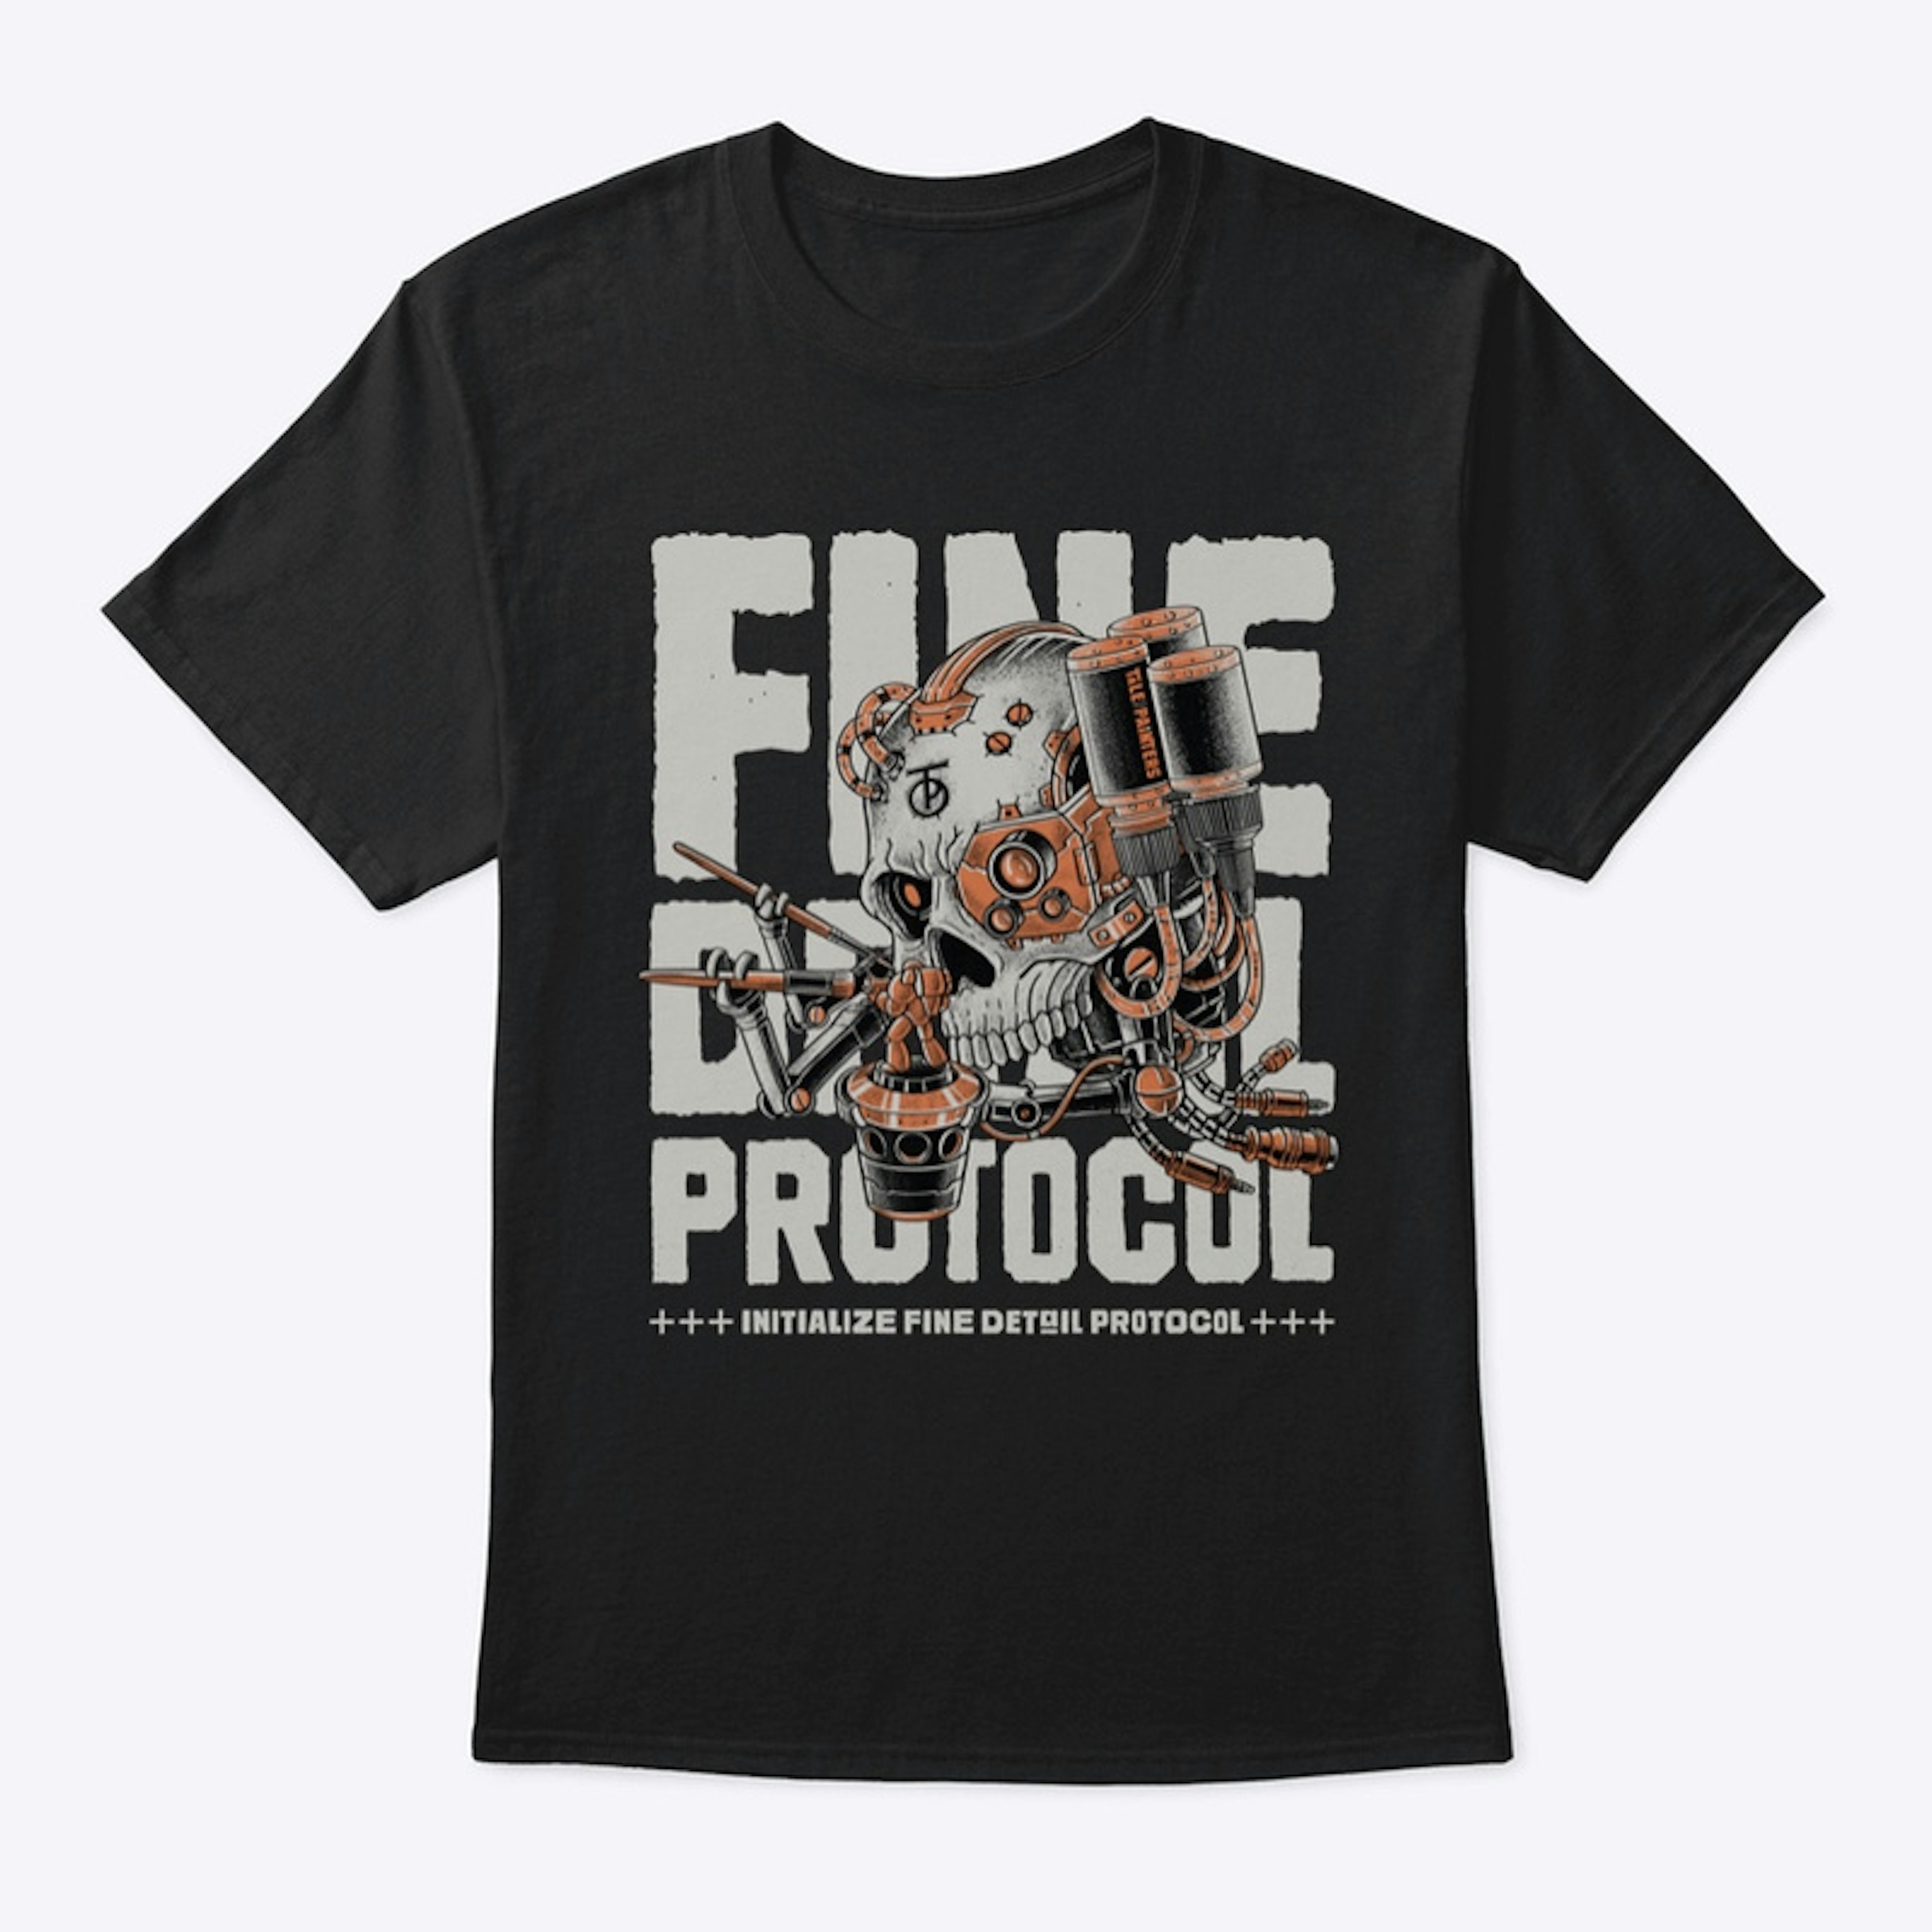 FINE DETAIL PROTOCOL Black T-Shirt